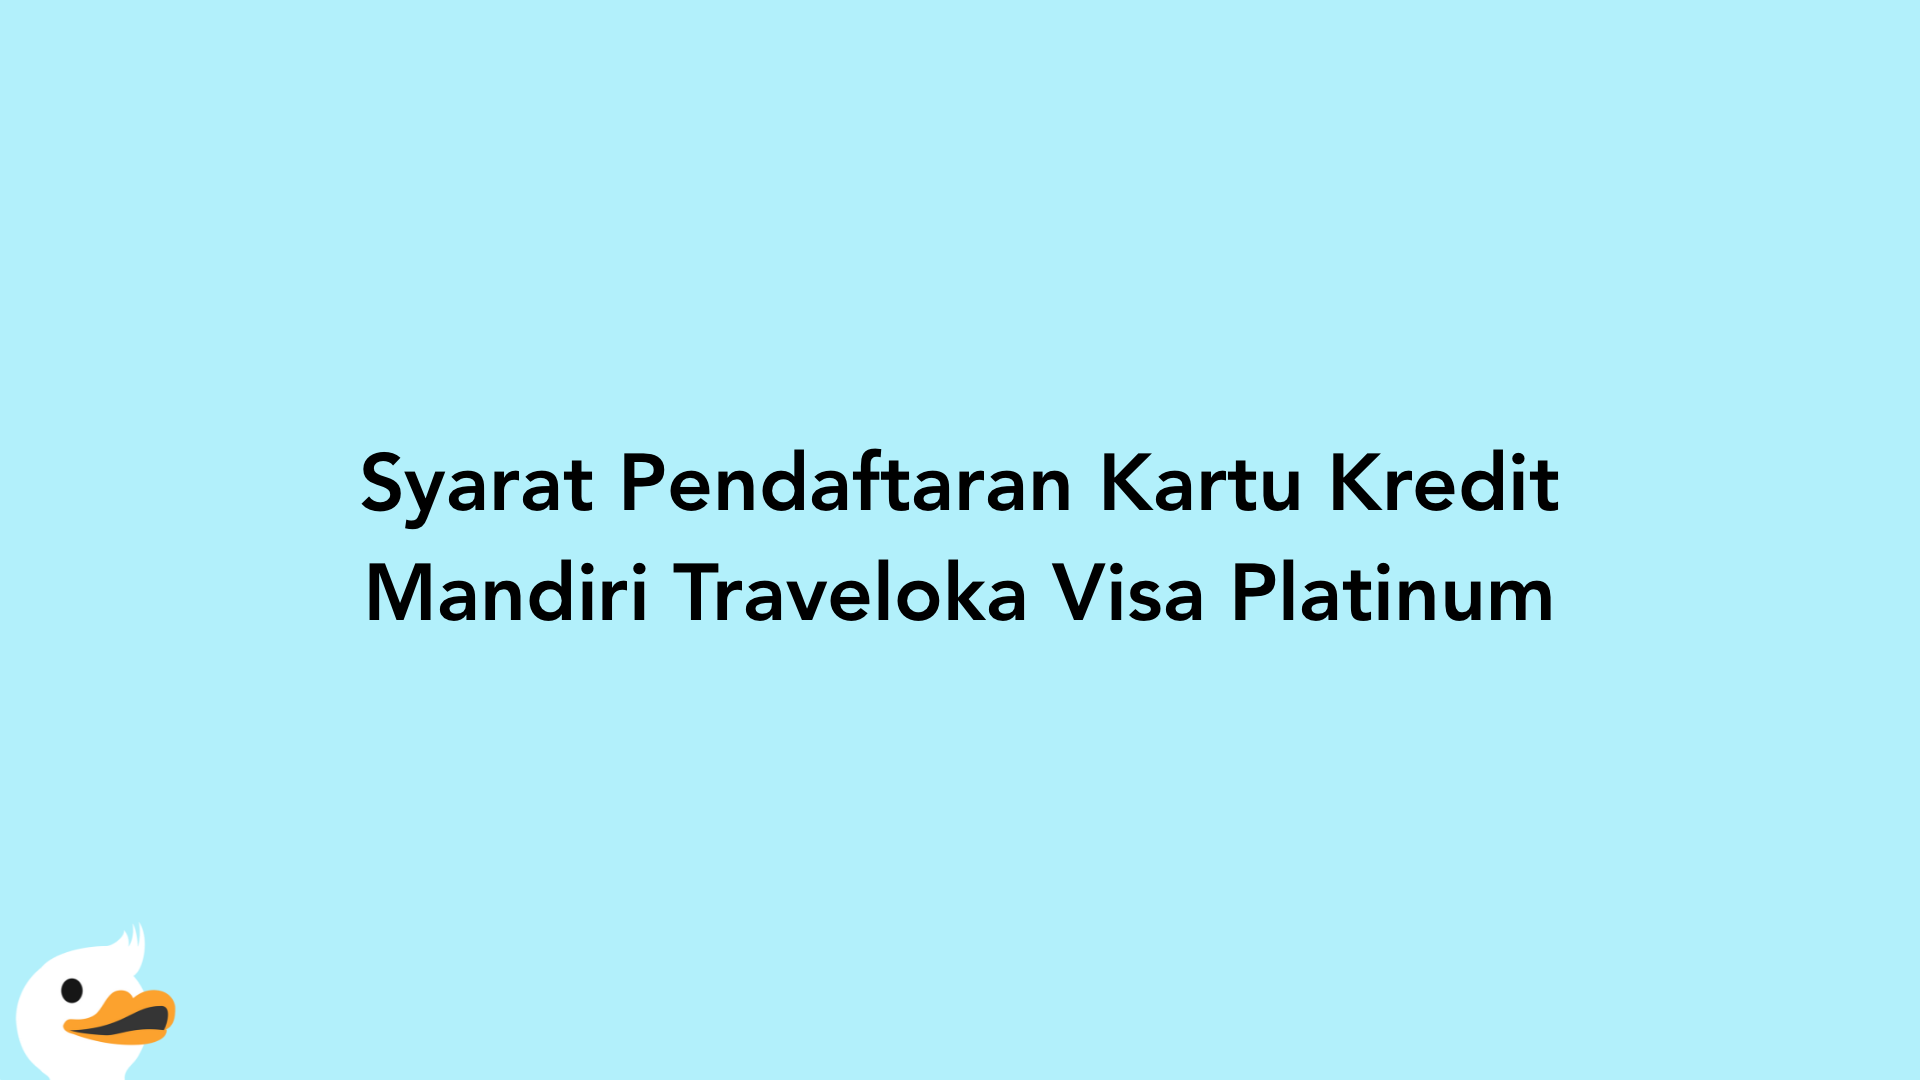 Syarat Pendaftaran Kartu Kredit Mandiri Traveloka Visa Platinum